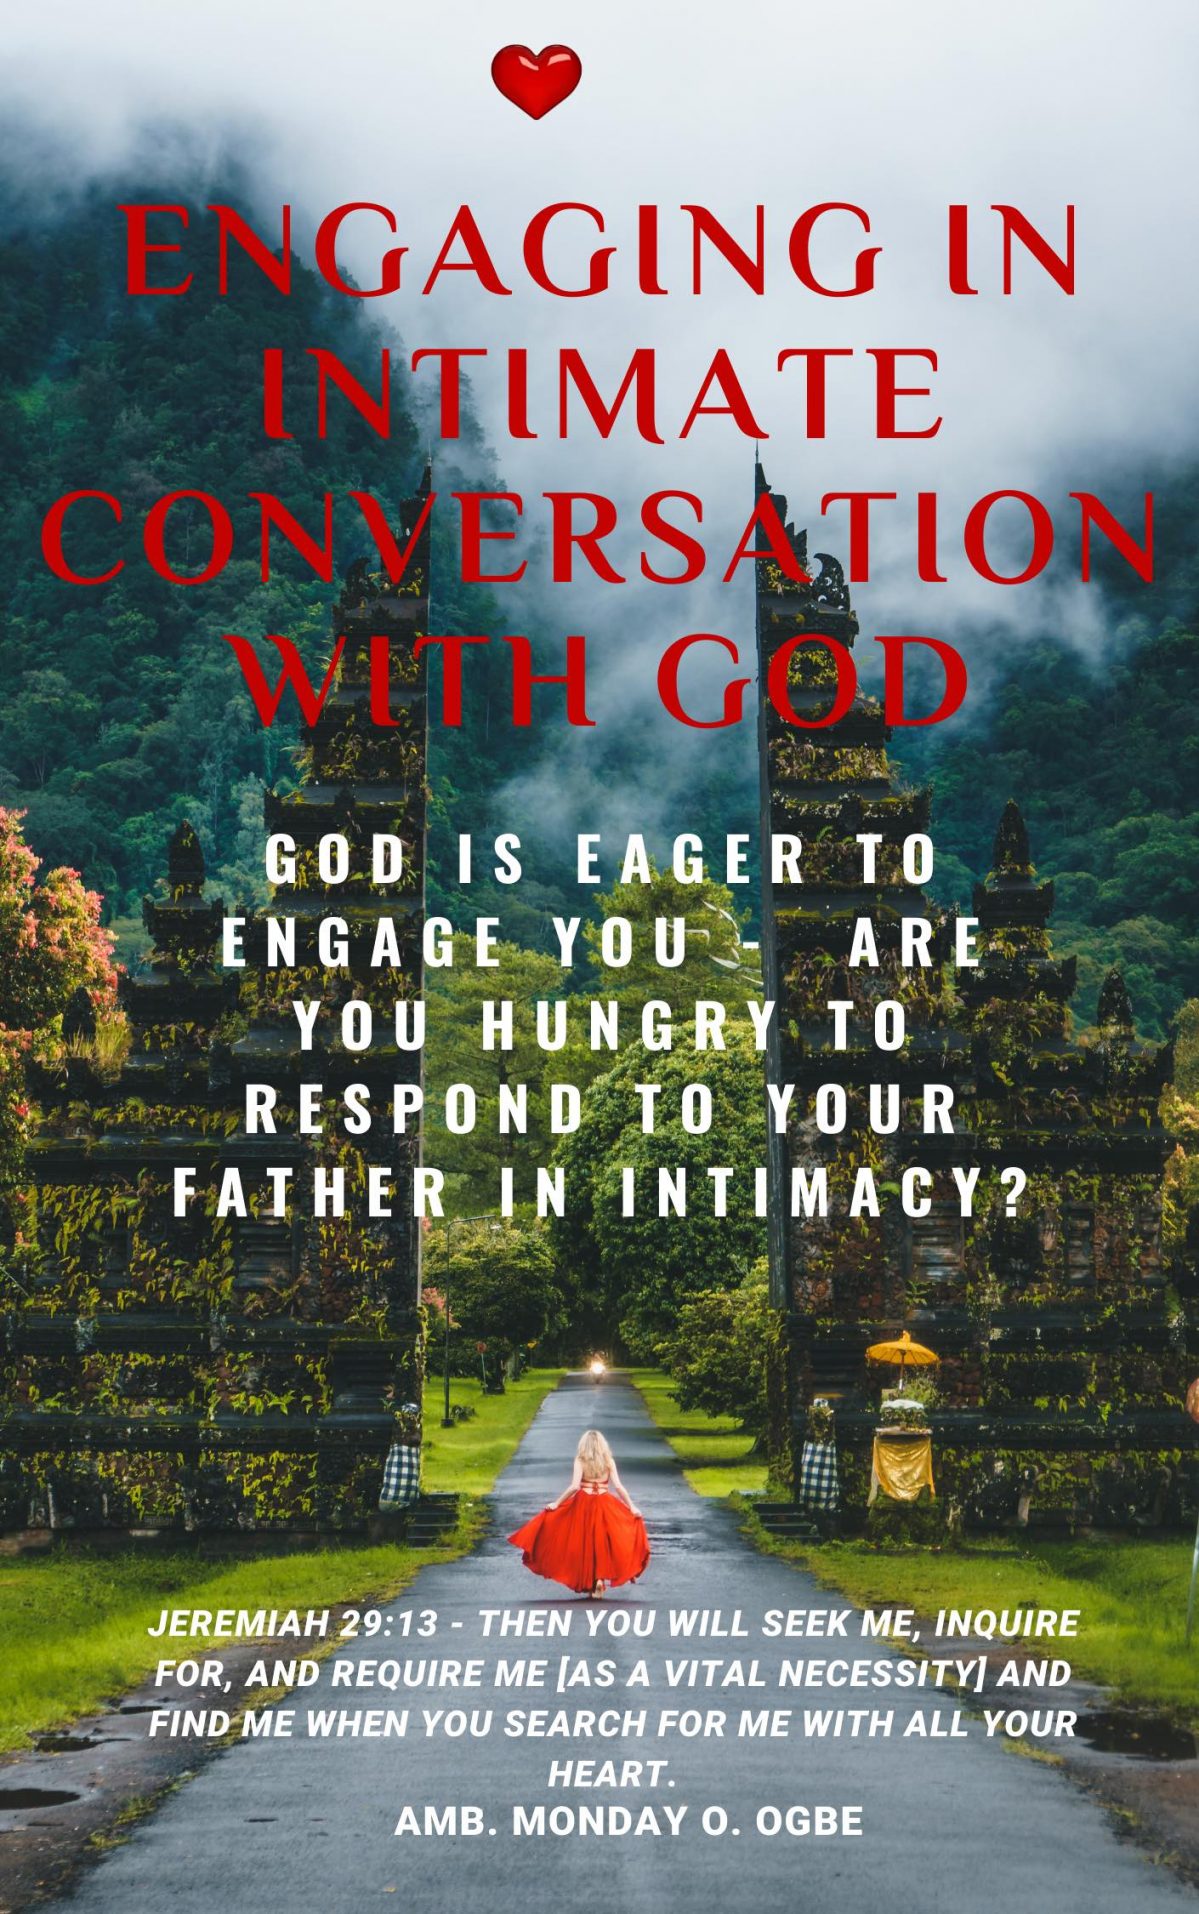 Ambassador Oreojo Monday Ogwuojo Ogbe - Engaging in Intimate Conversation with God - Ebook Edition